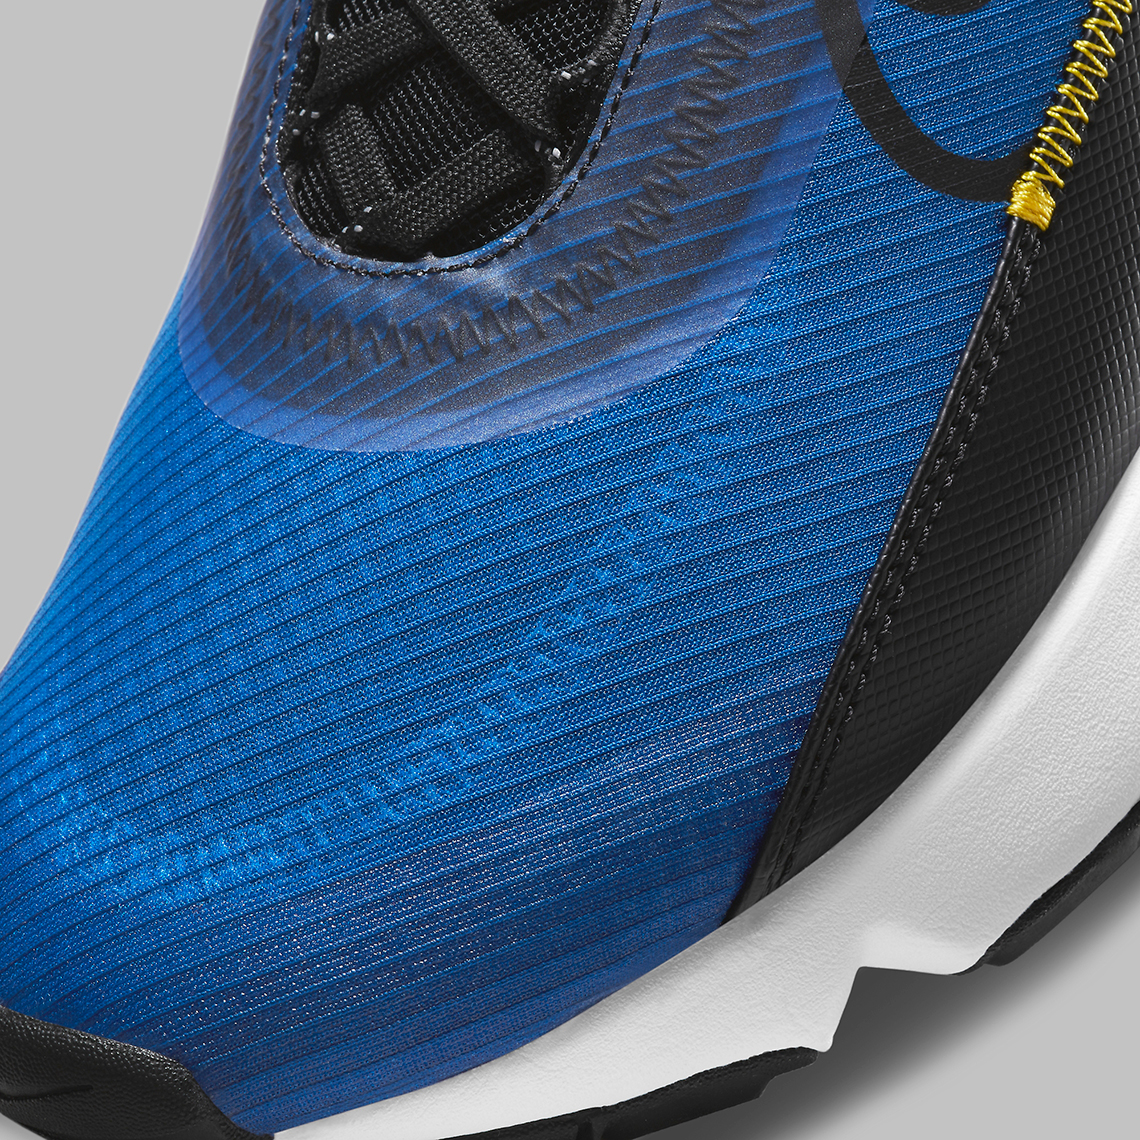 Nike Air Max 2090 Blue Black CV8835-400 | SneakerNews.com